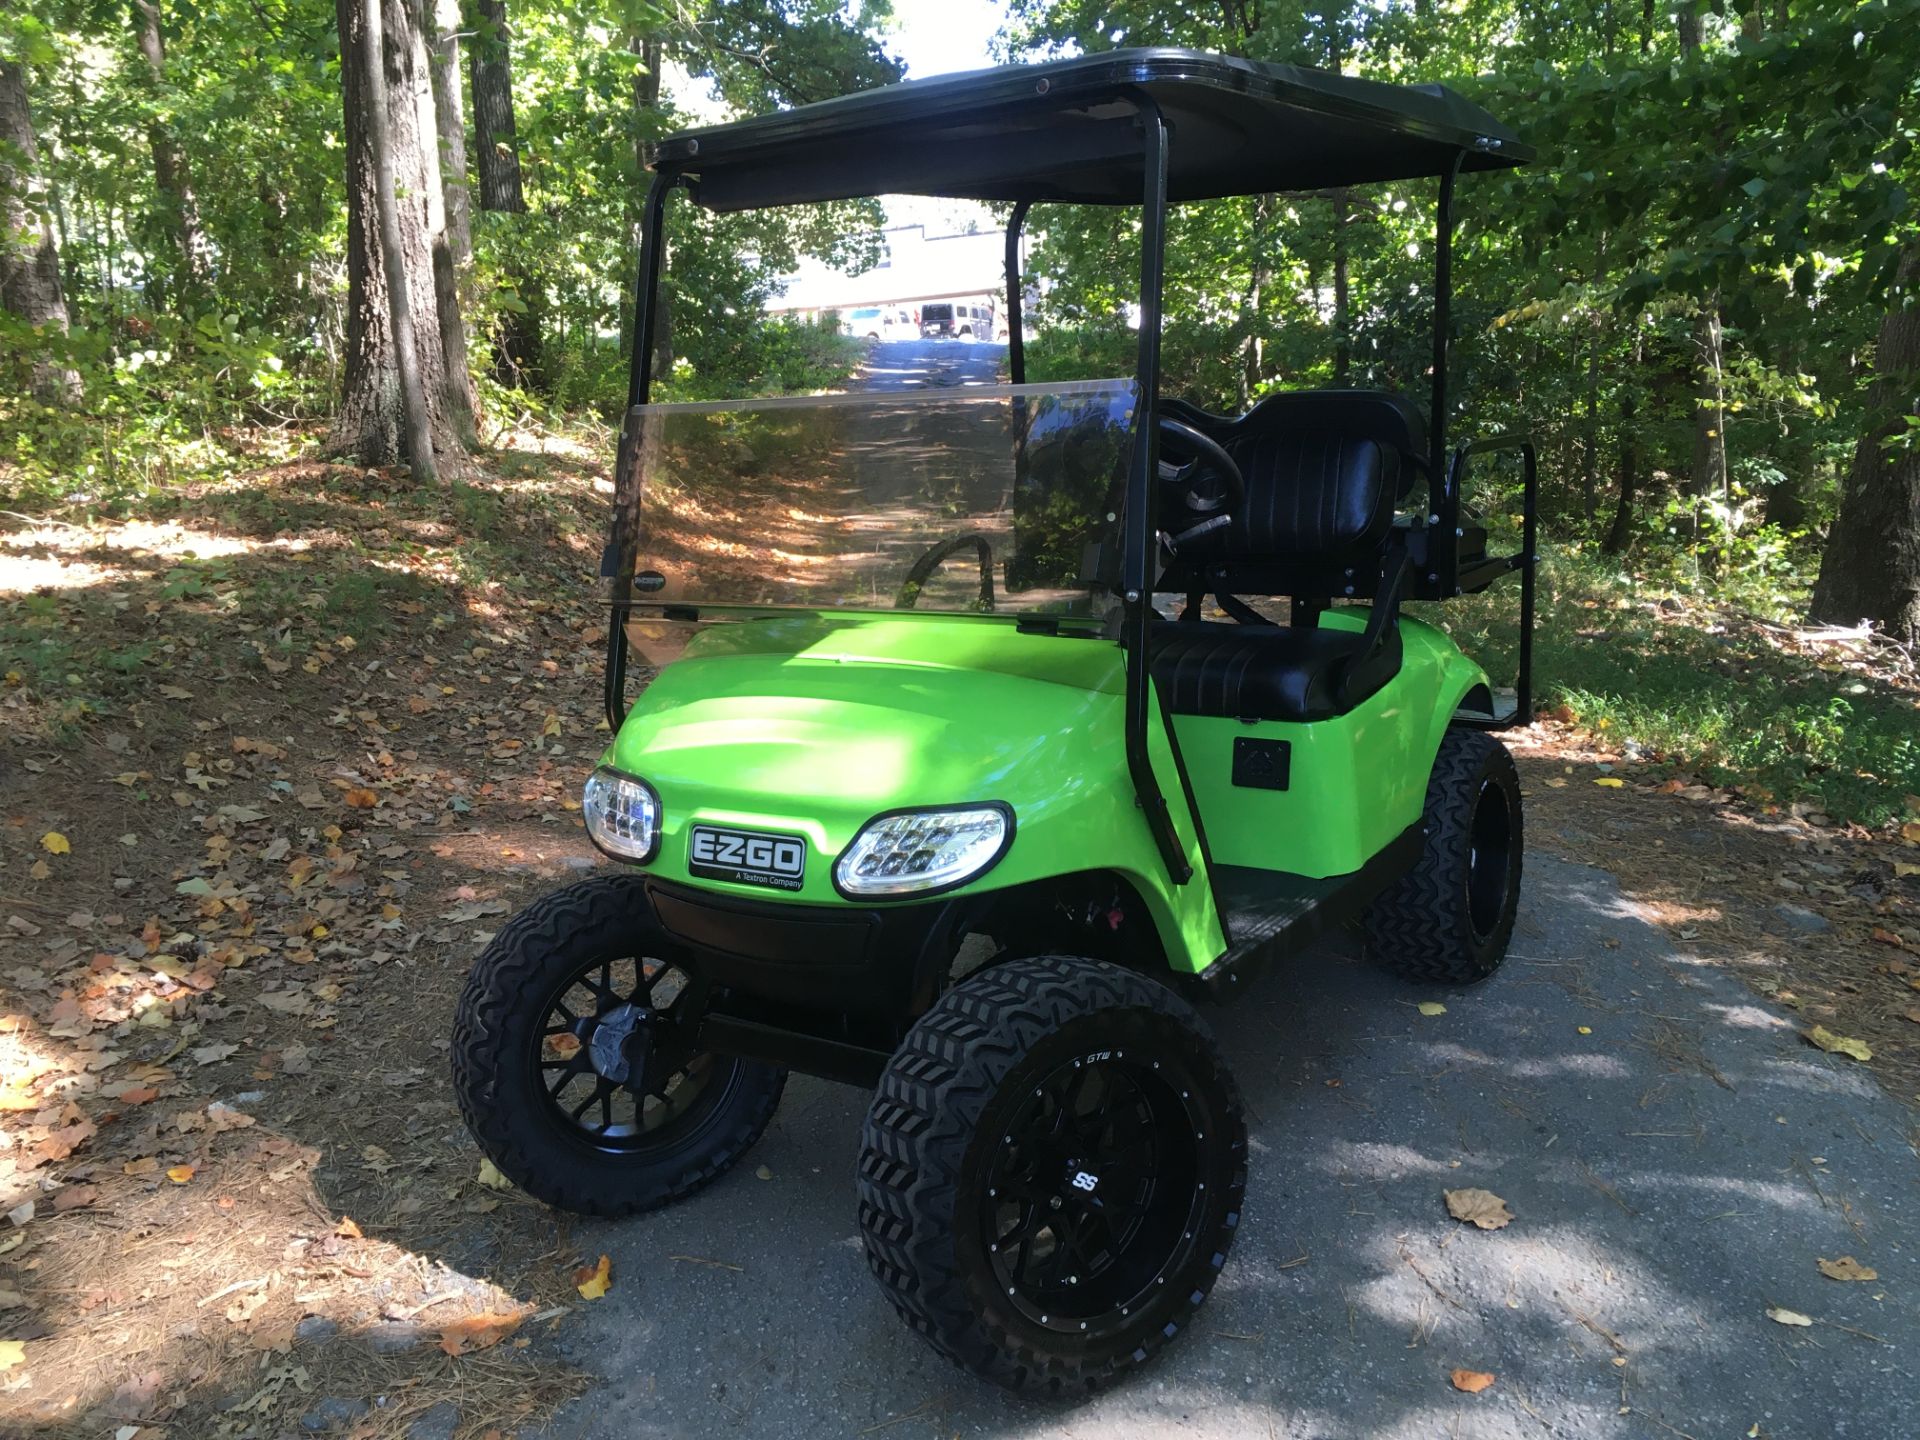 2015 EZ-GO txt 48v electric golf cart in Woodstock, Georgia - Photo 1